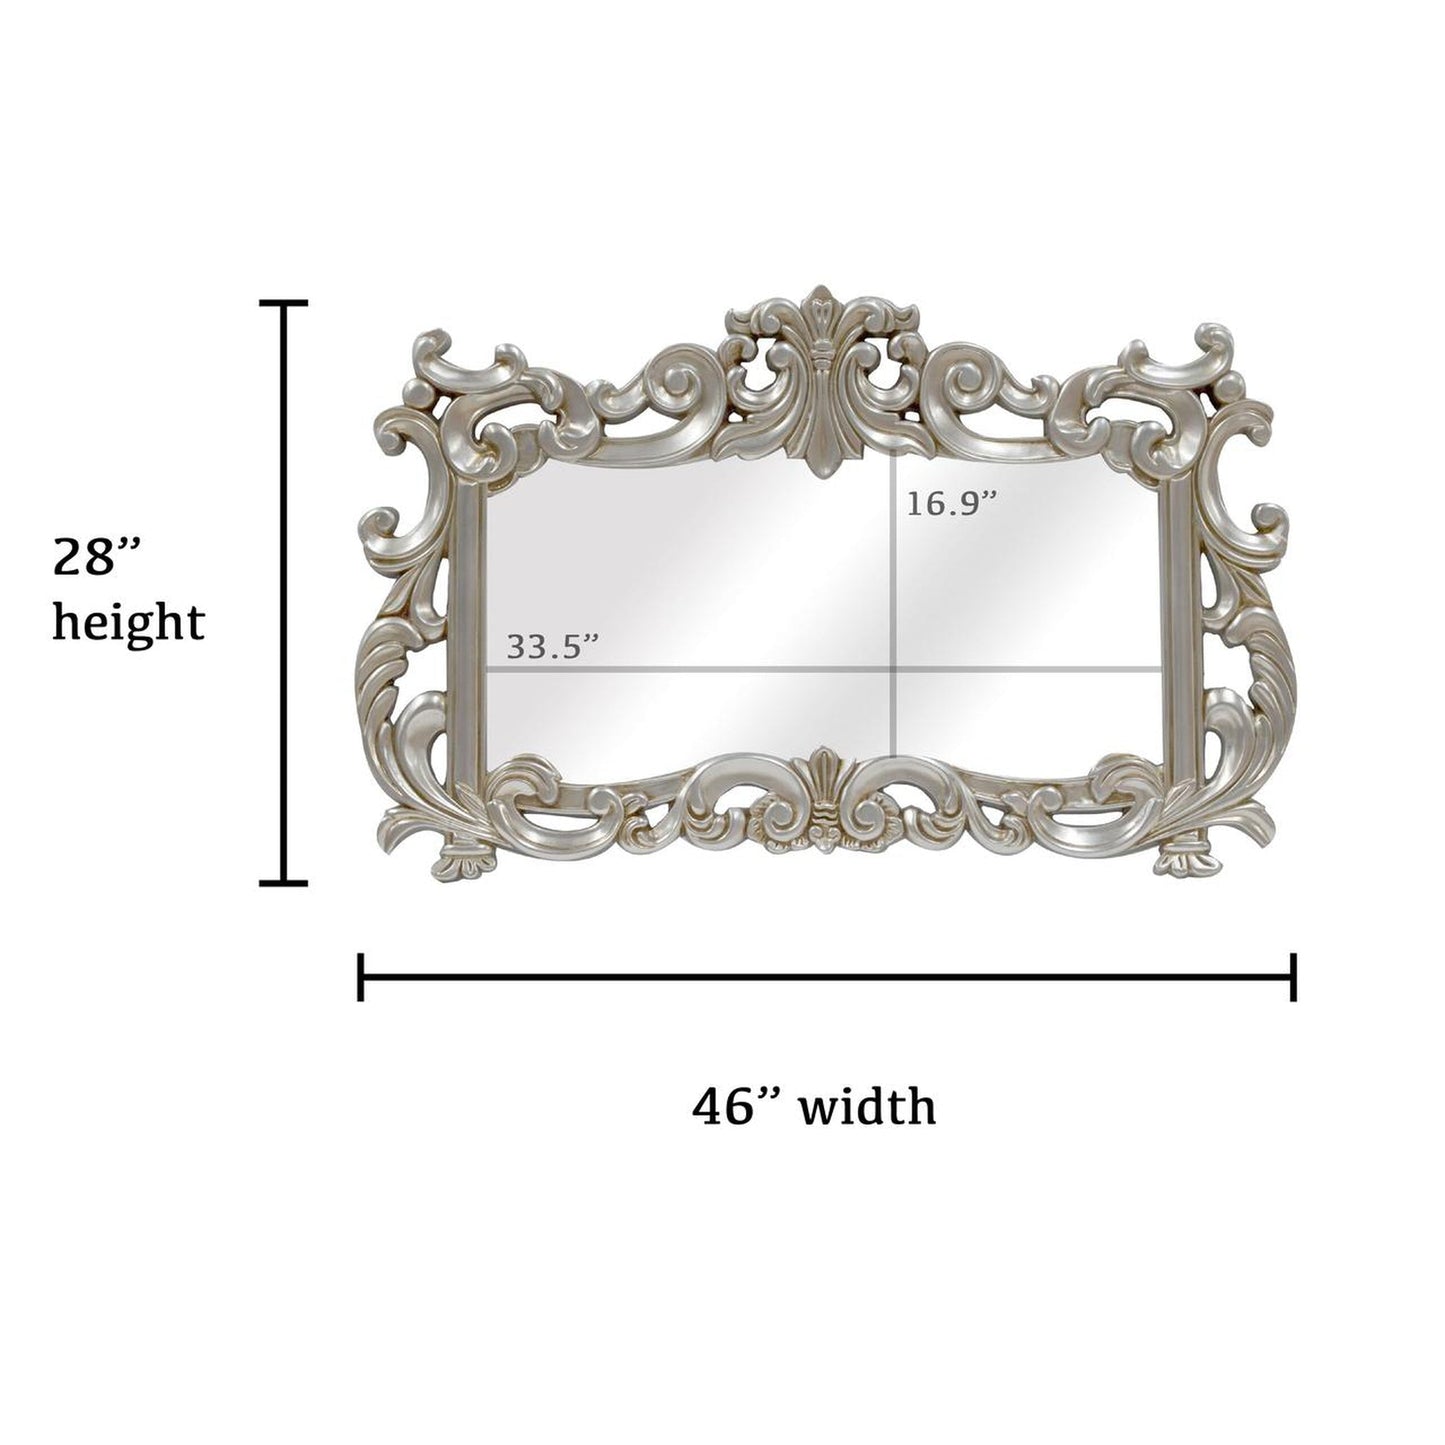 SBC Decor La Rue 46" x 28" Wall-Mounted Light Weight Resin Wall Mirror In Satin Silver Finish